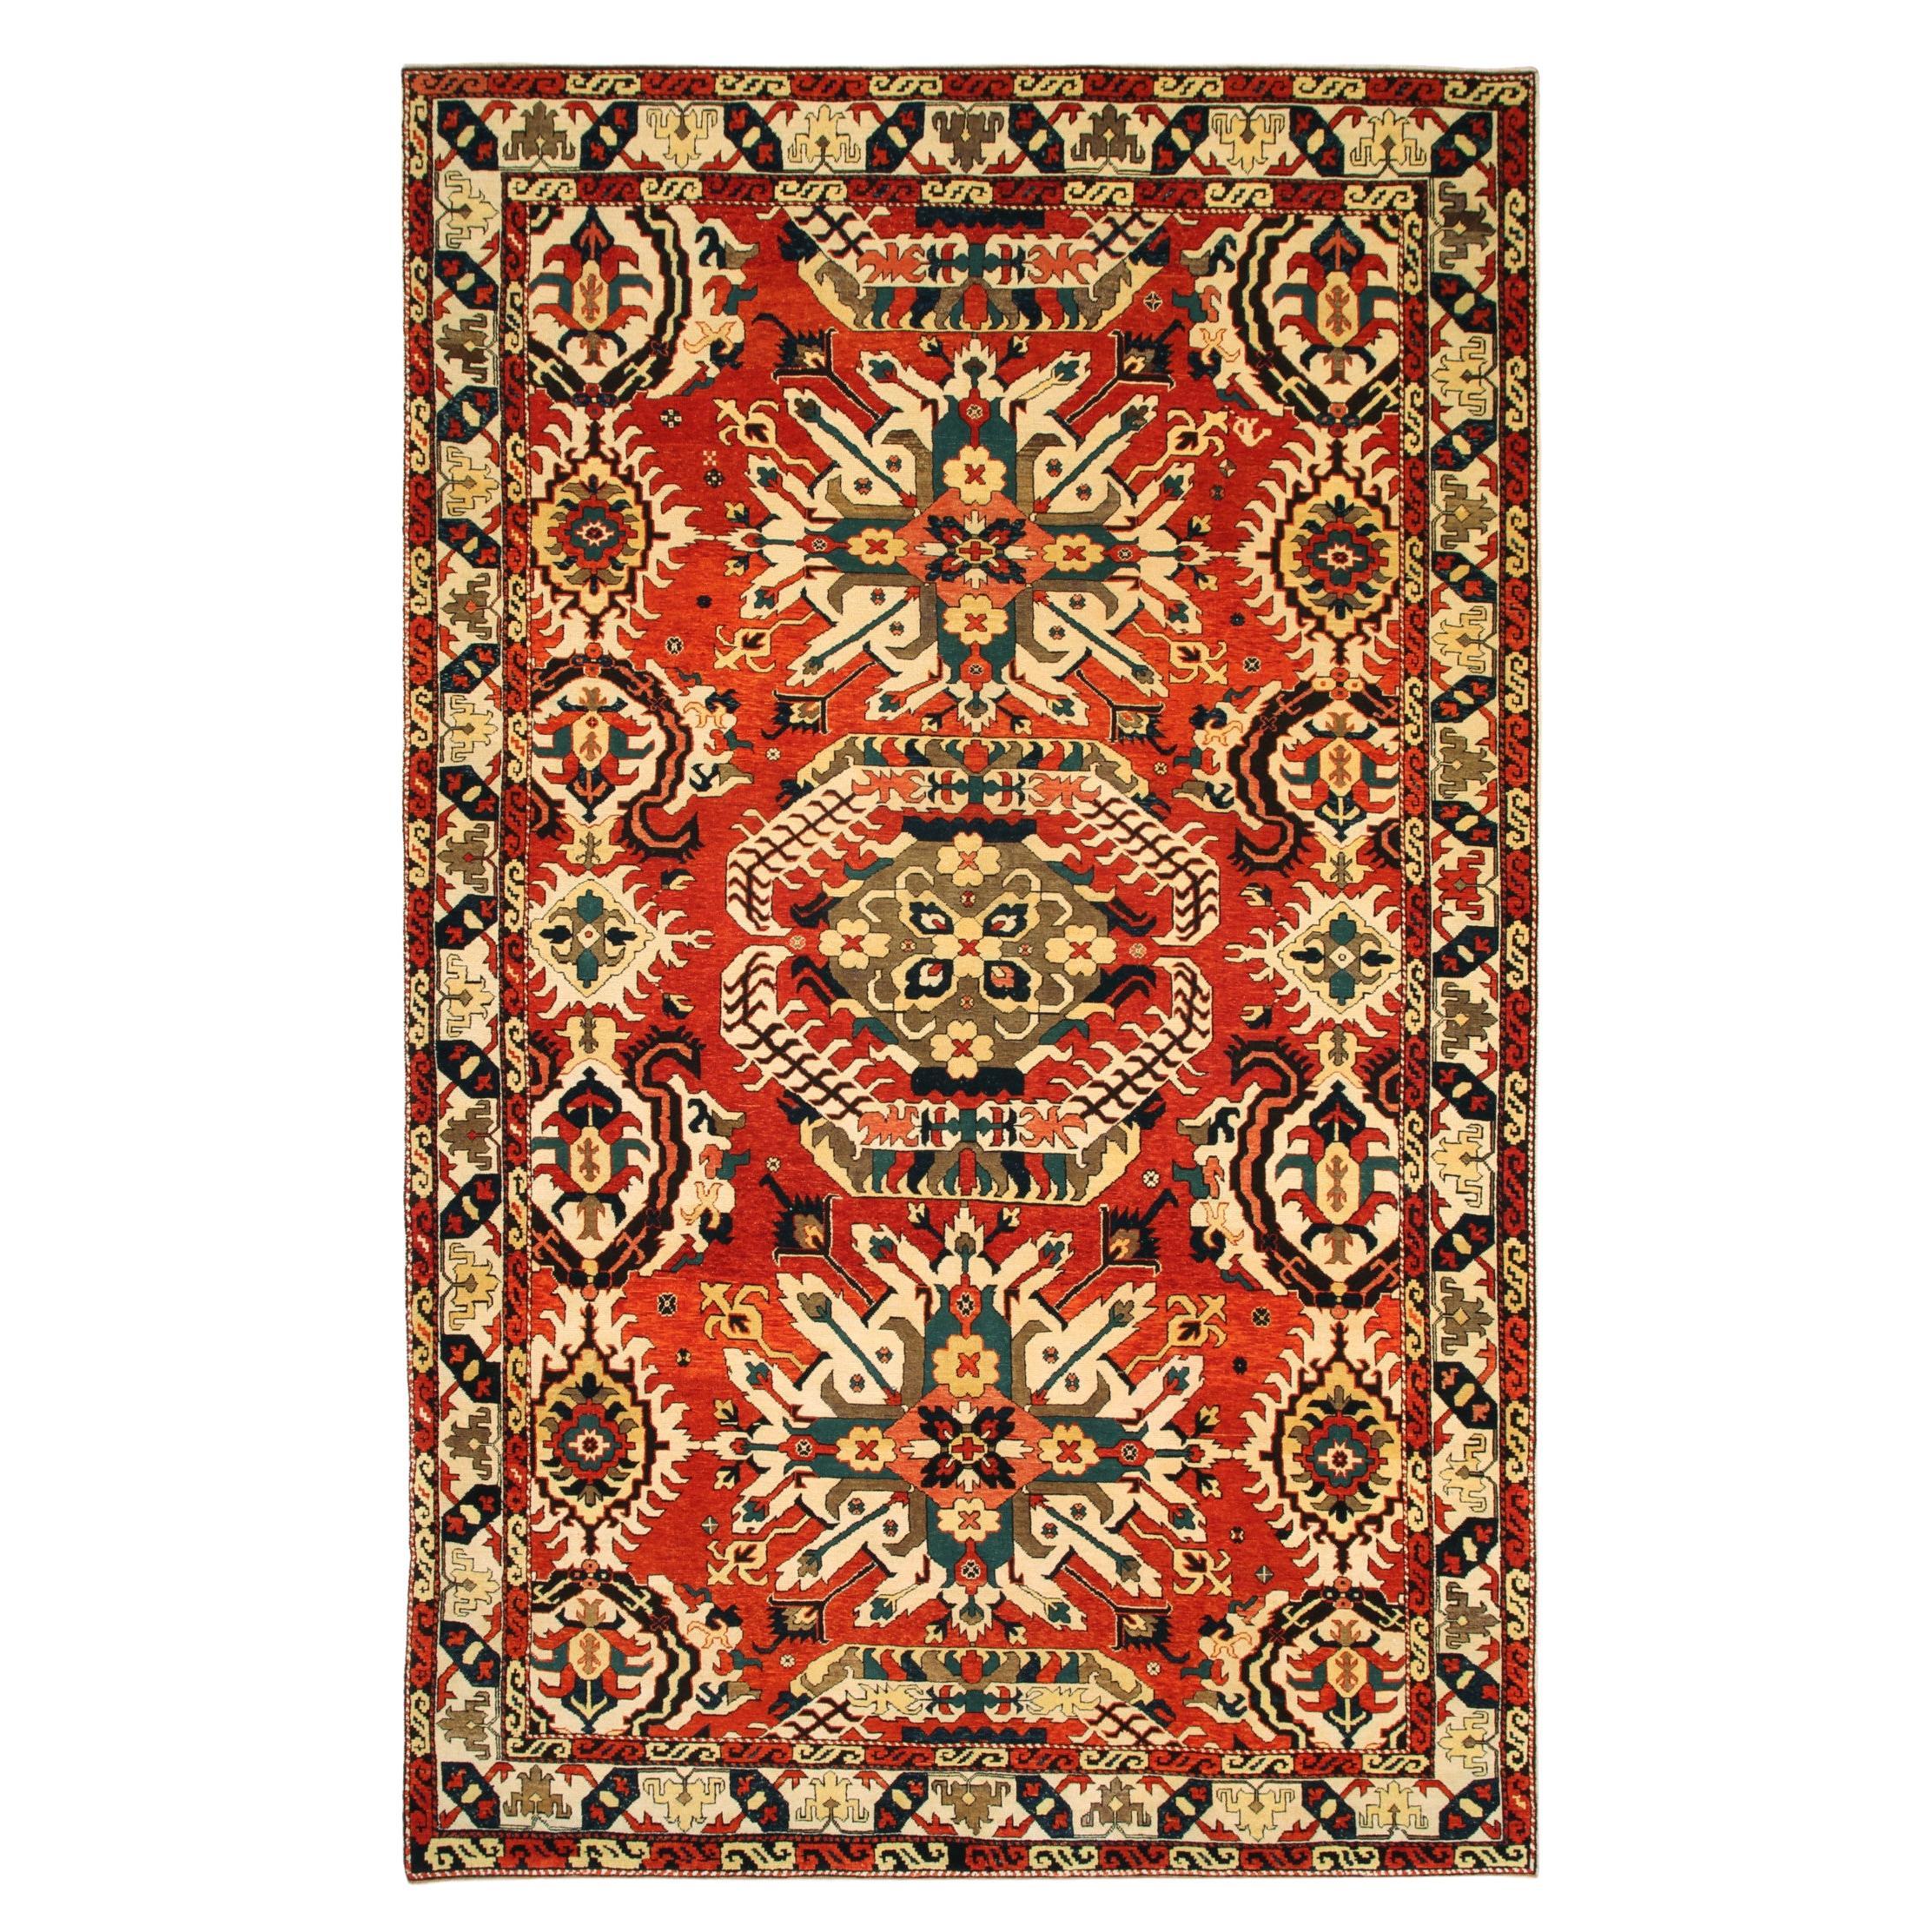 Ararat Rugs Chelaberd Karabakh Rug 19th C. Caucasian Revival Carpet Natural Dyed